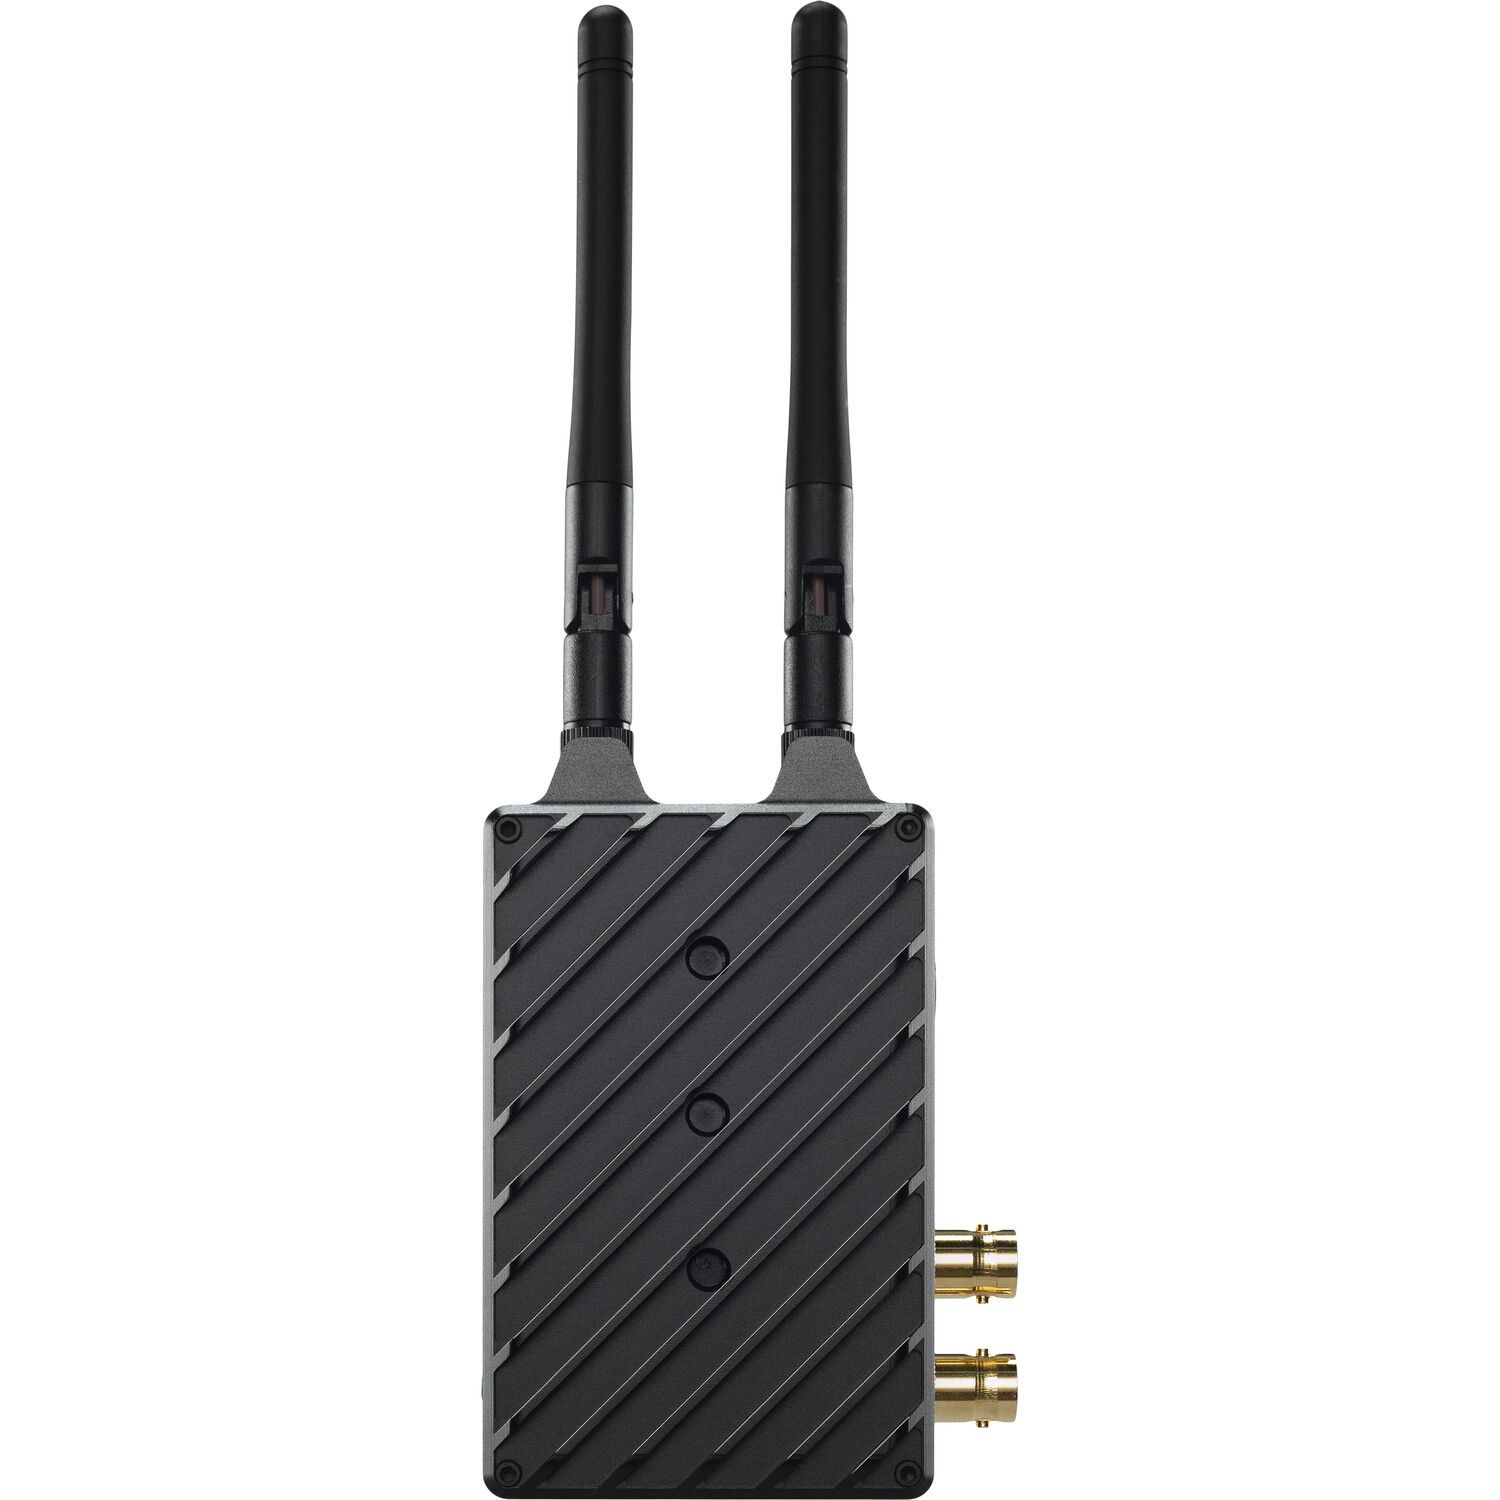 TERADEK - Bolt 4K LT 750 - Émetteur sans fil